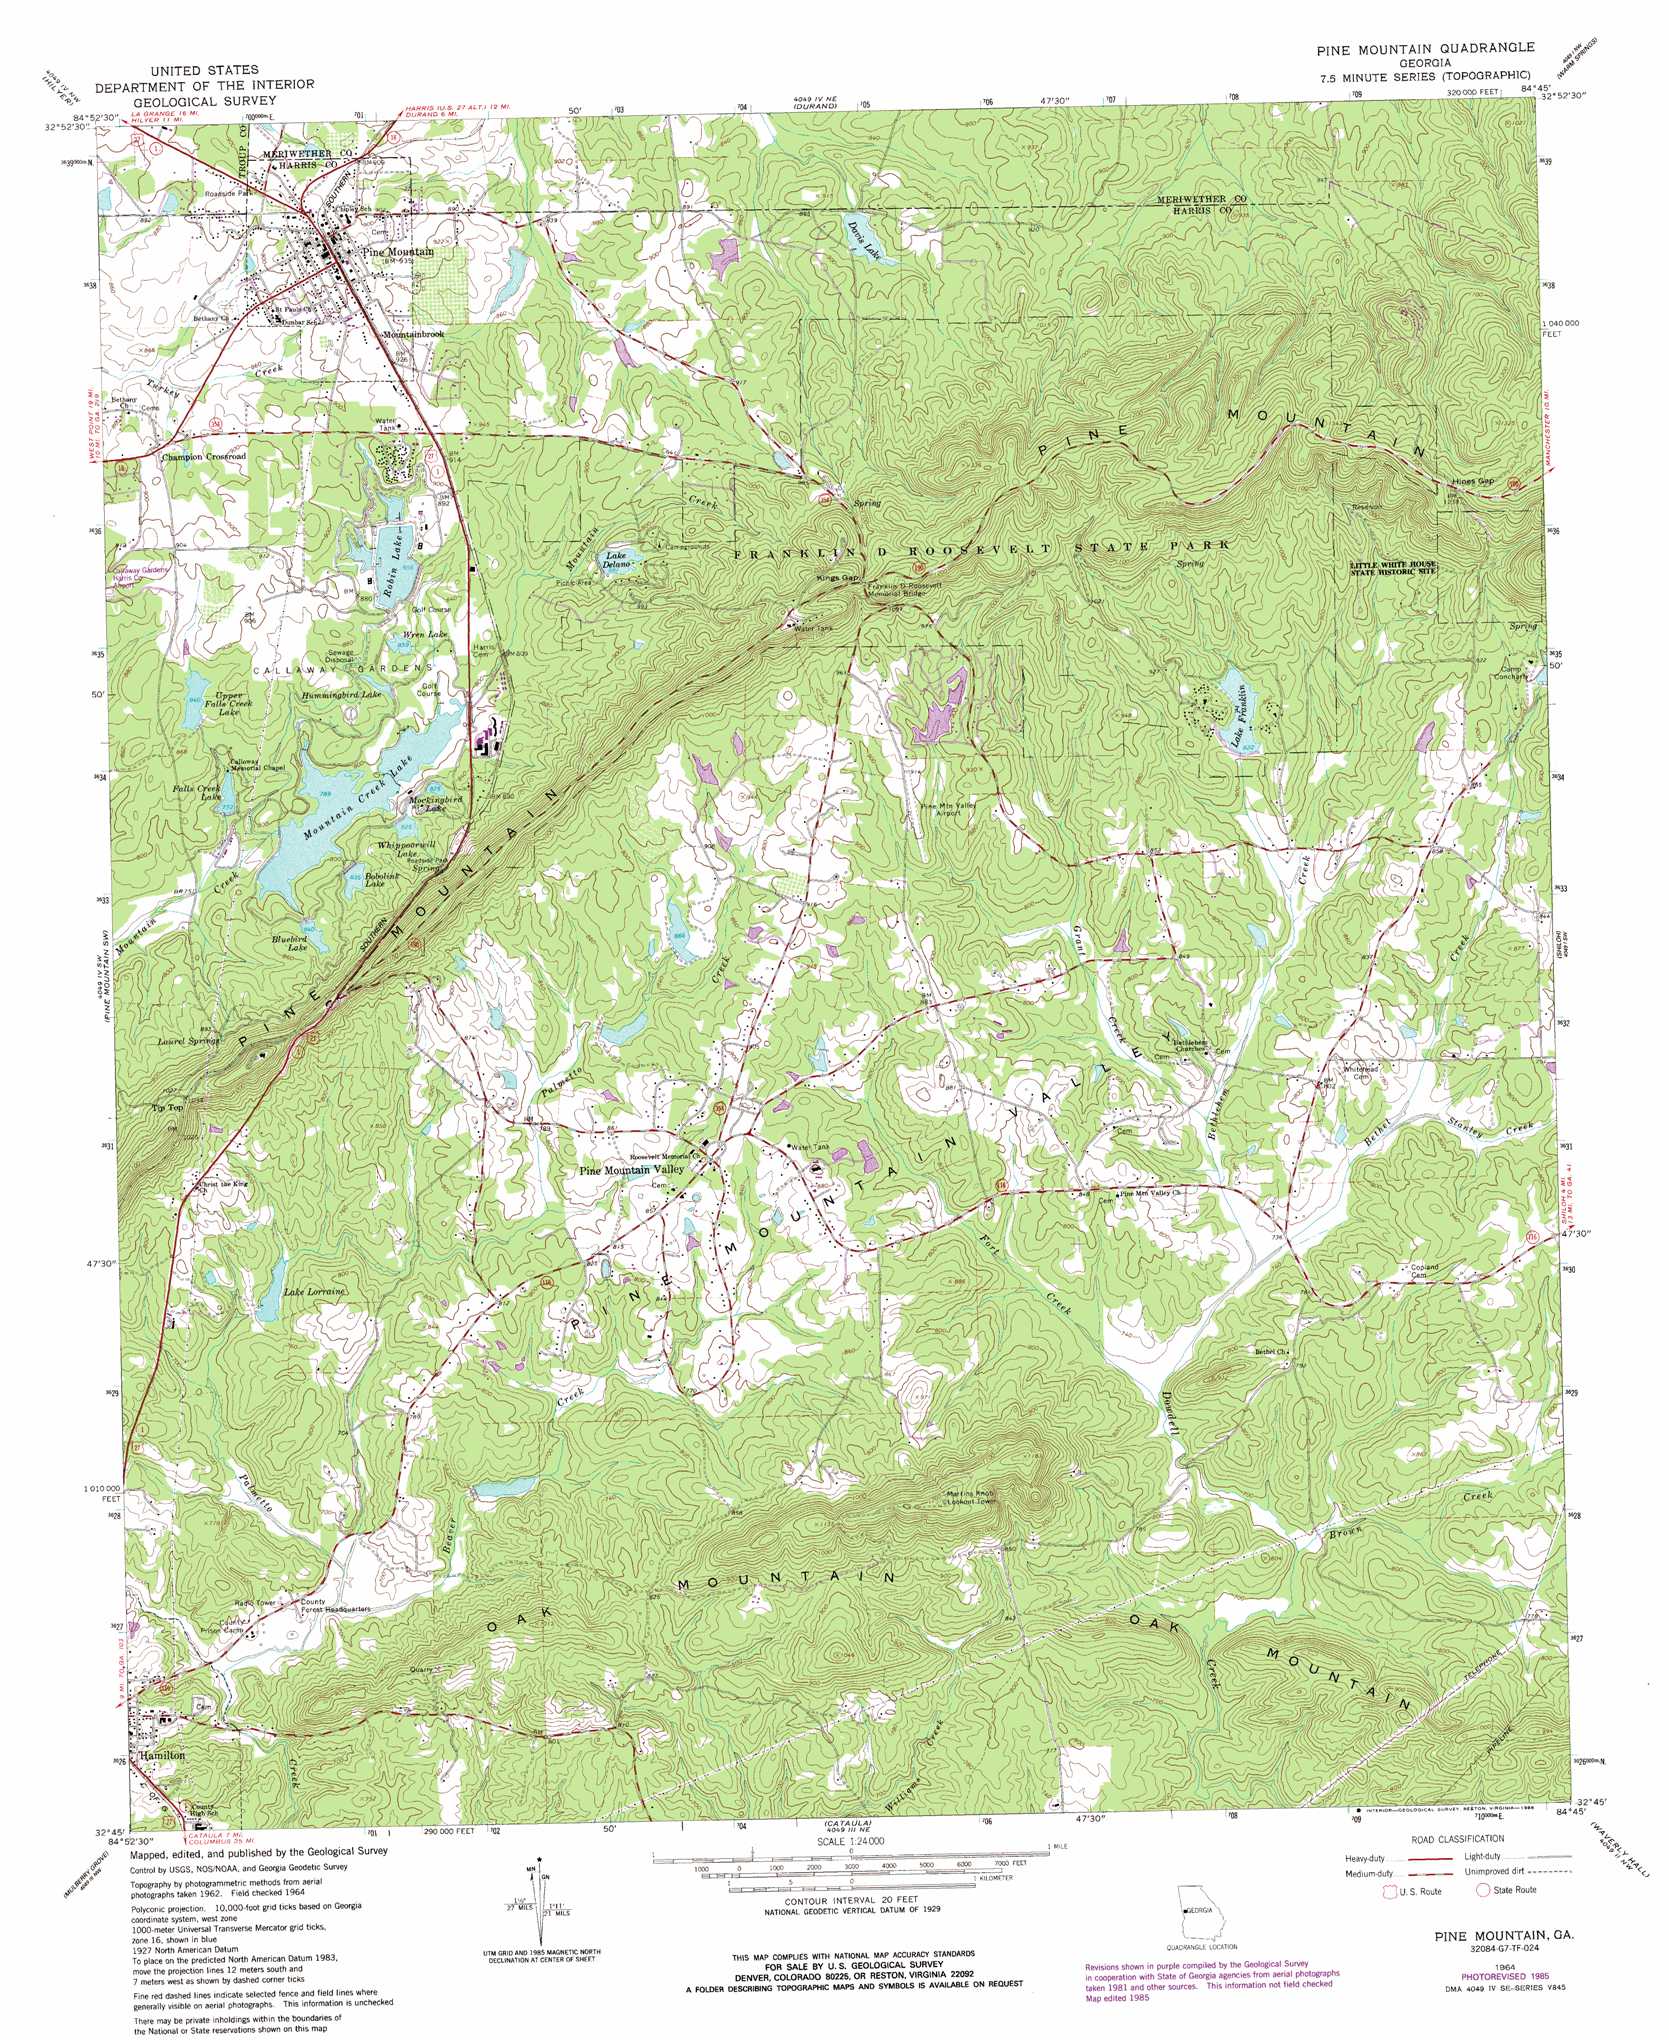 Pine Mountain topographic map, GA - USGS Topo Quad 32084g7